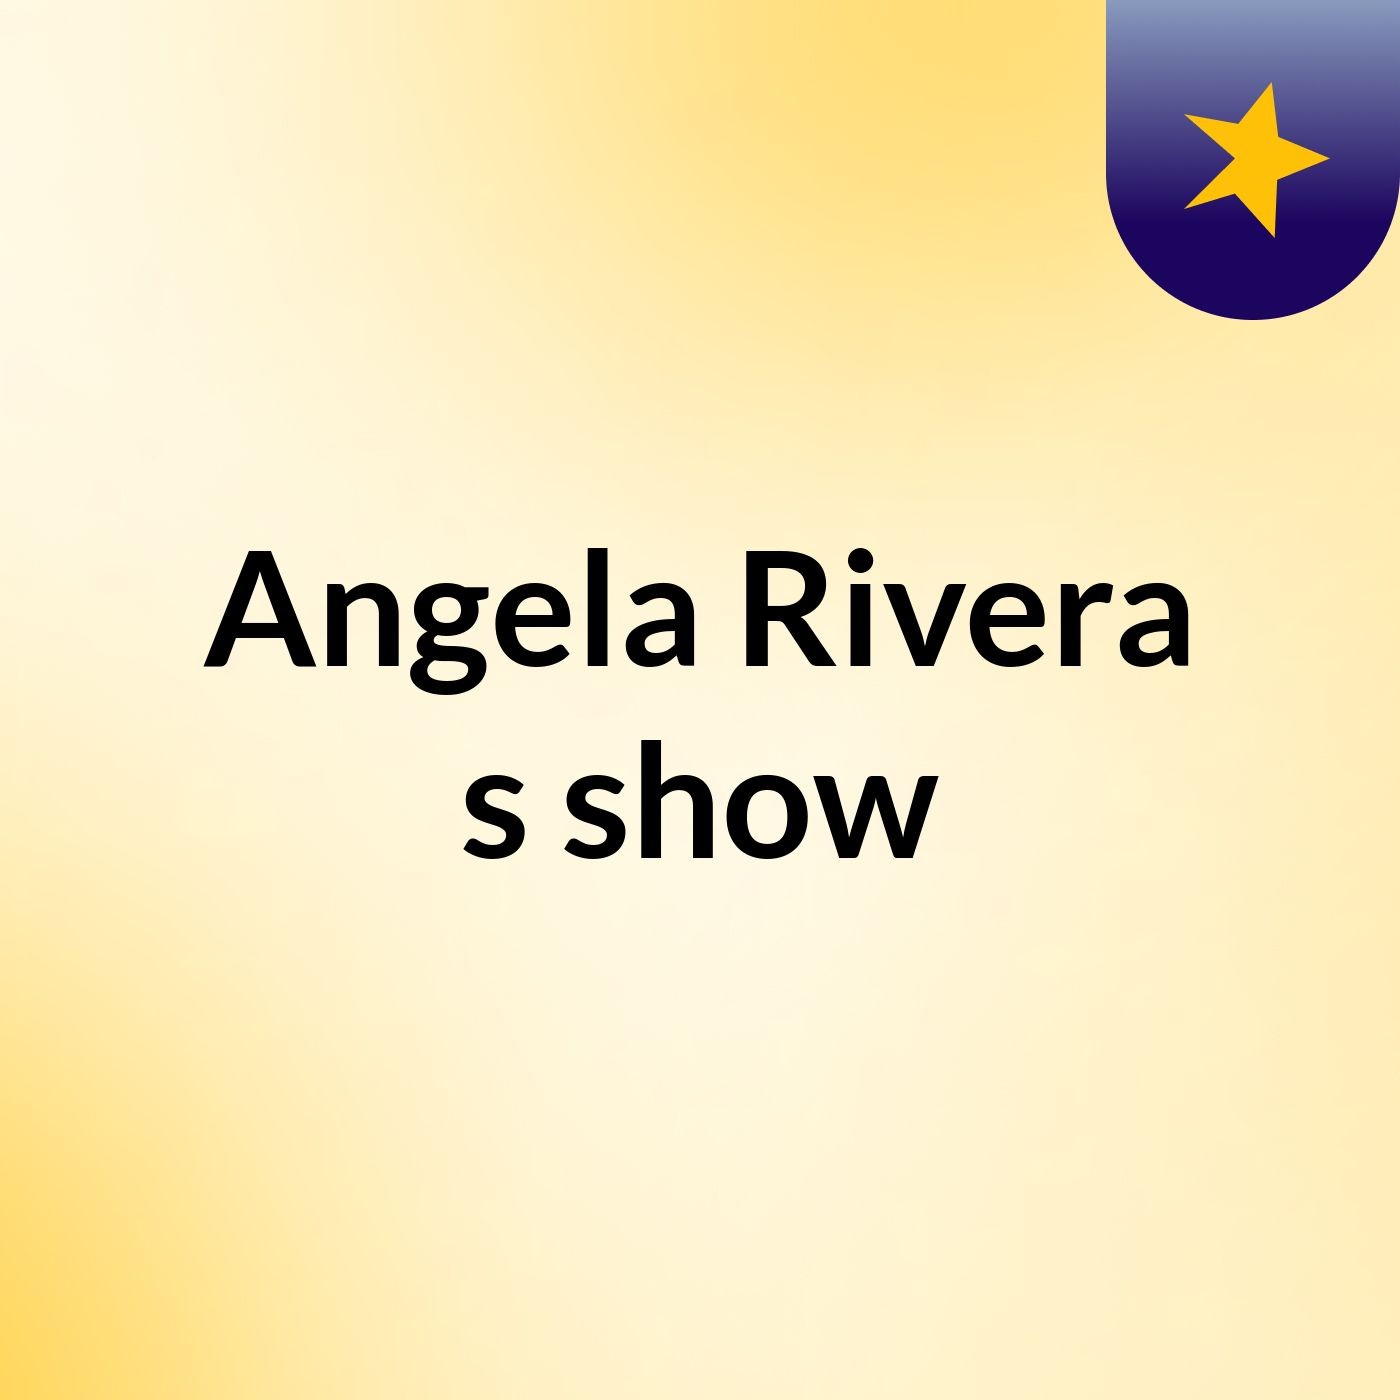 Angela Rivera's show